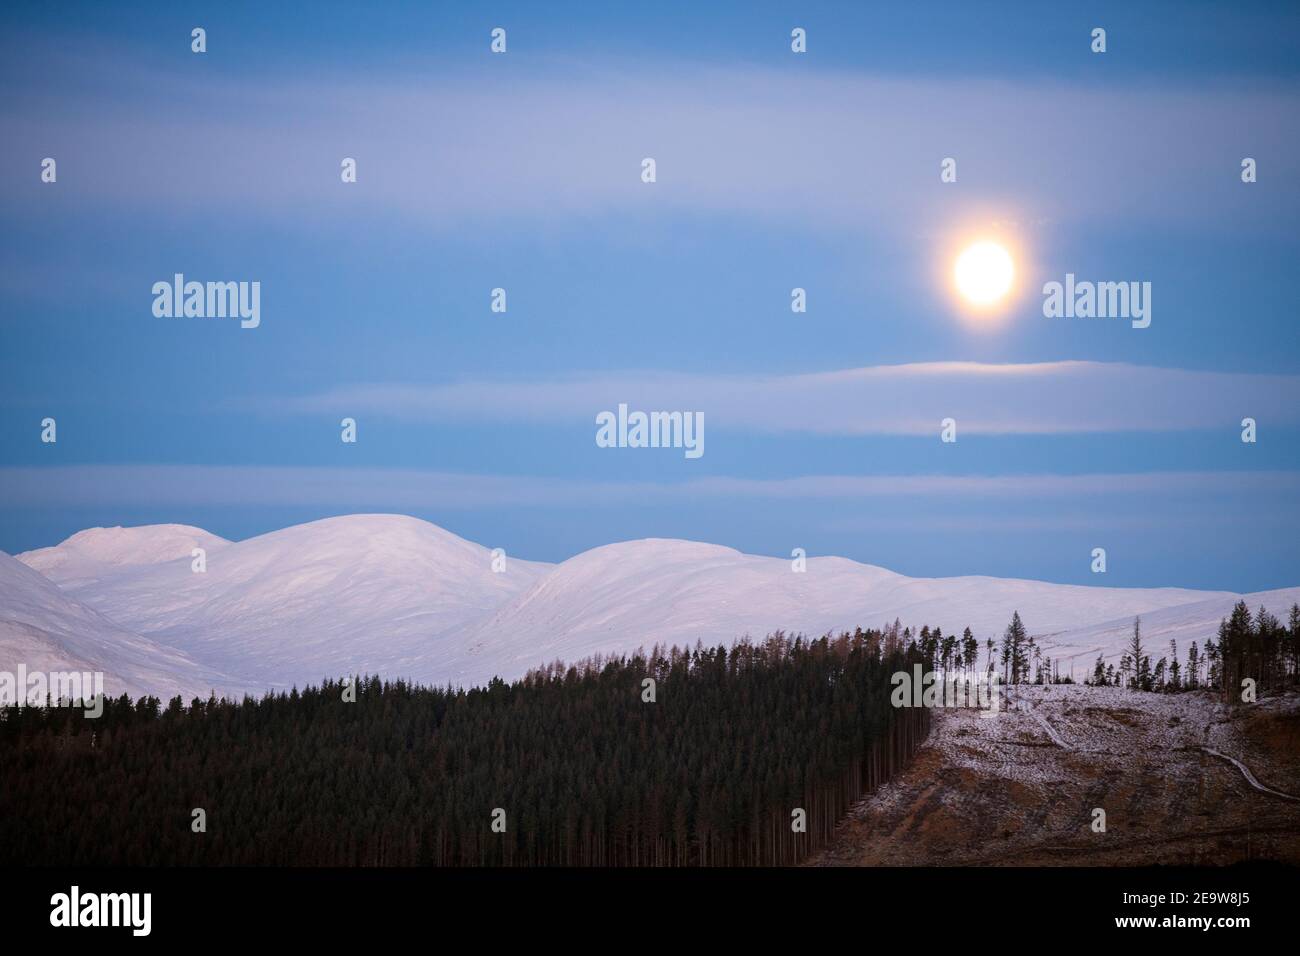 Full Moon over Snowy Mountains, Scotland. Stock Photo